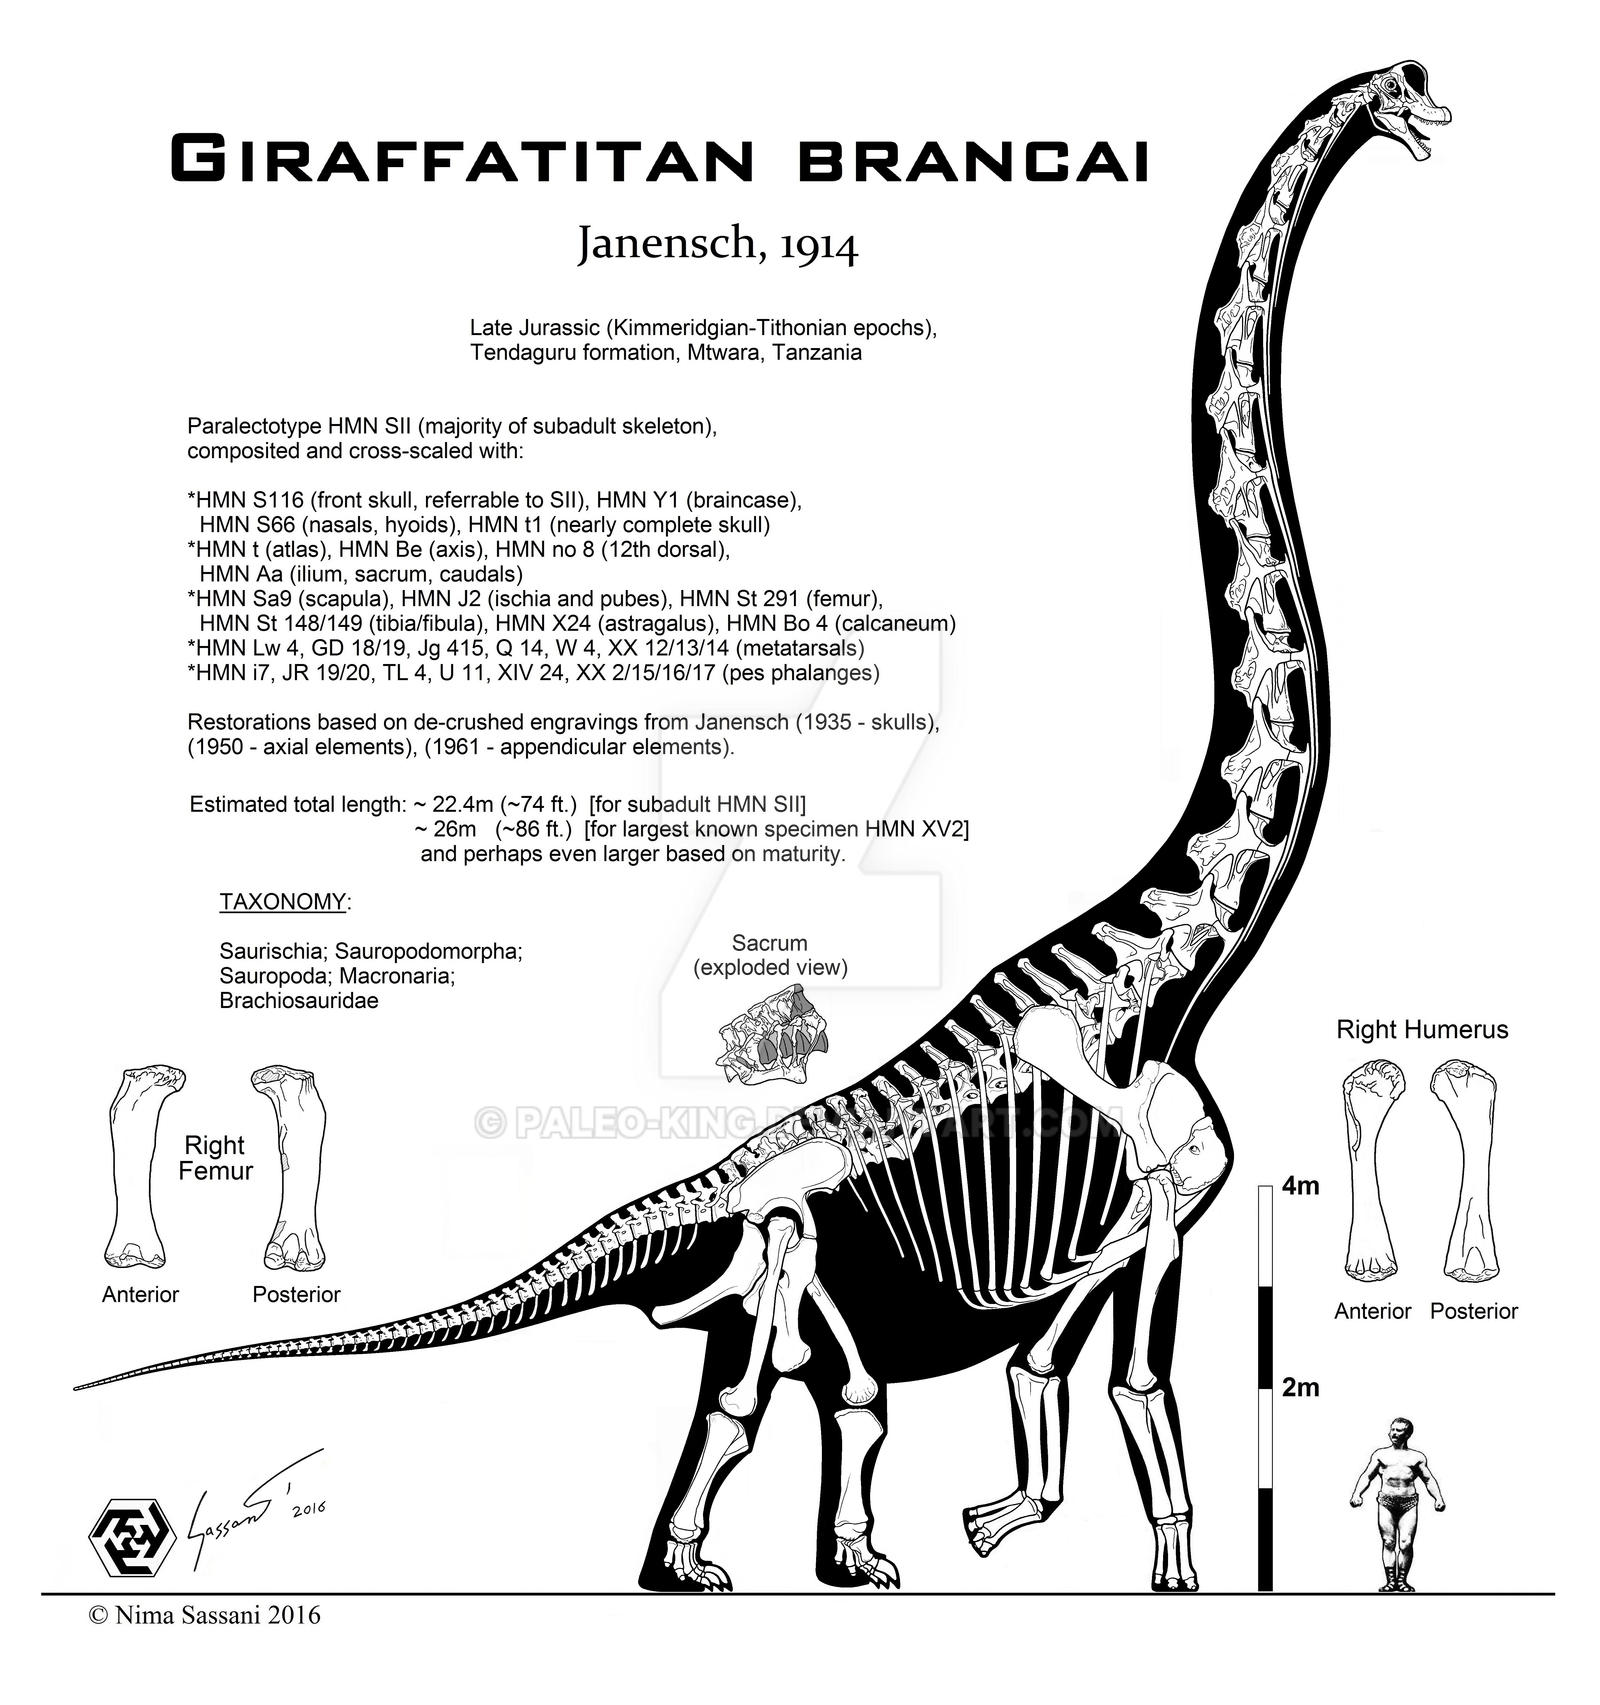 Giraffatitan brancai hi-fi skeletal